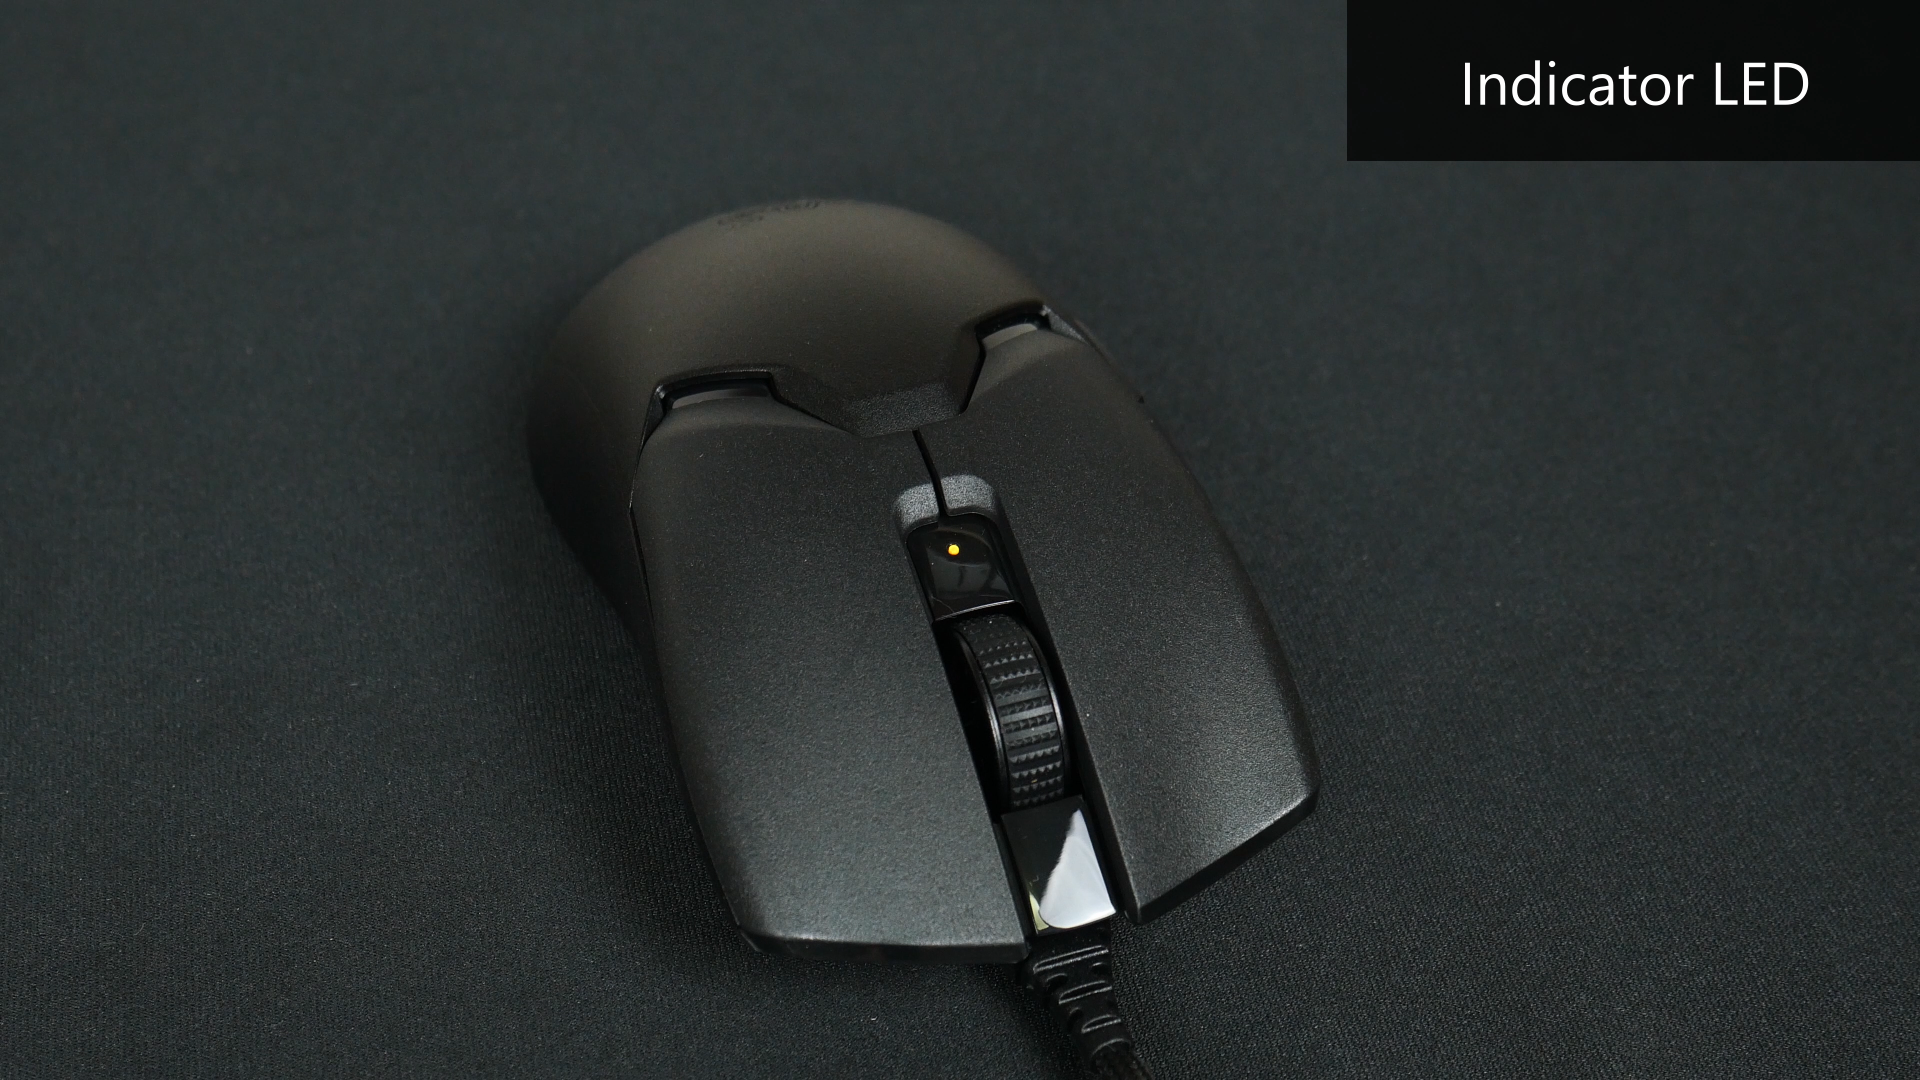 Review: Razer Viper V2 Pro Wireless Gaming Mouse